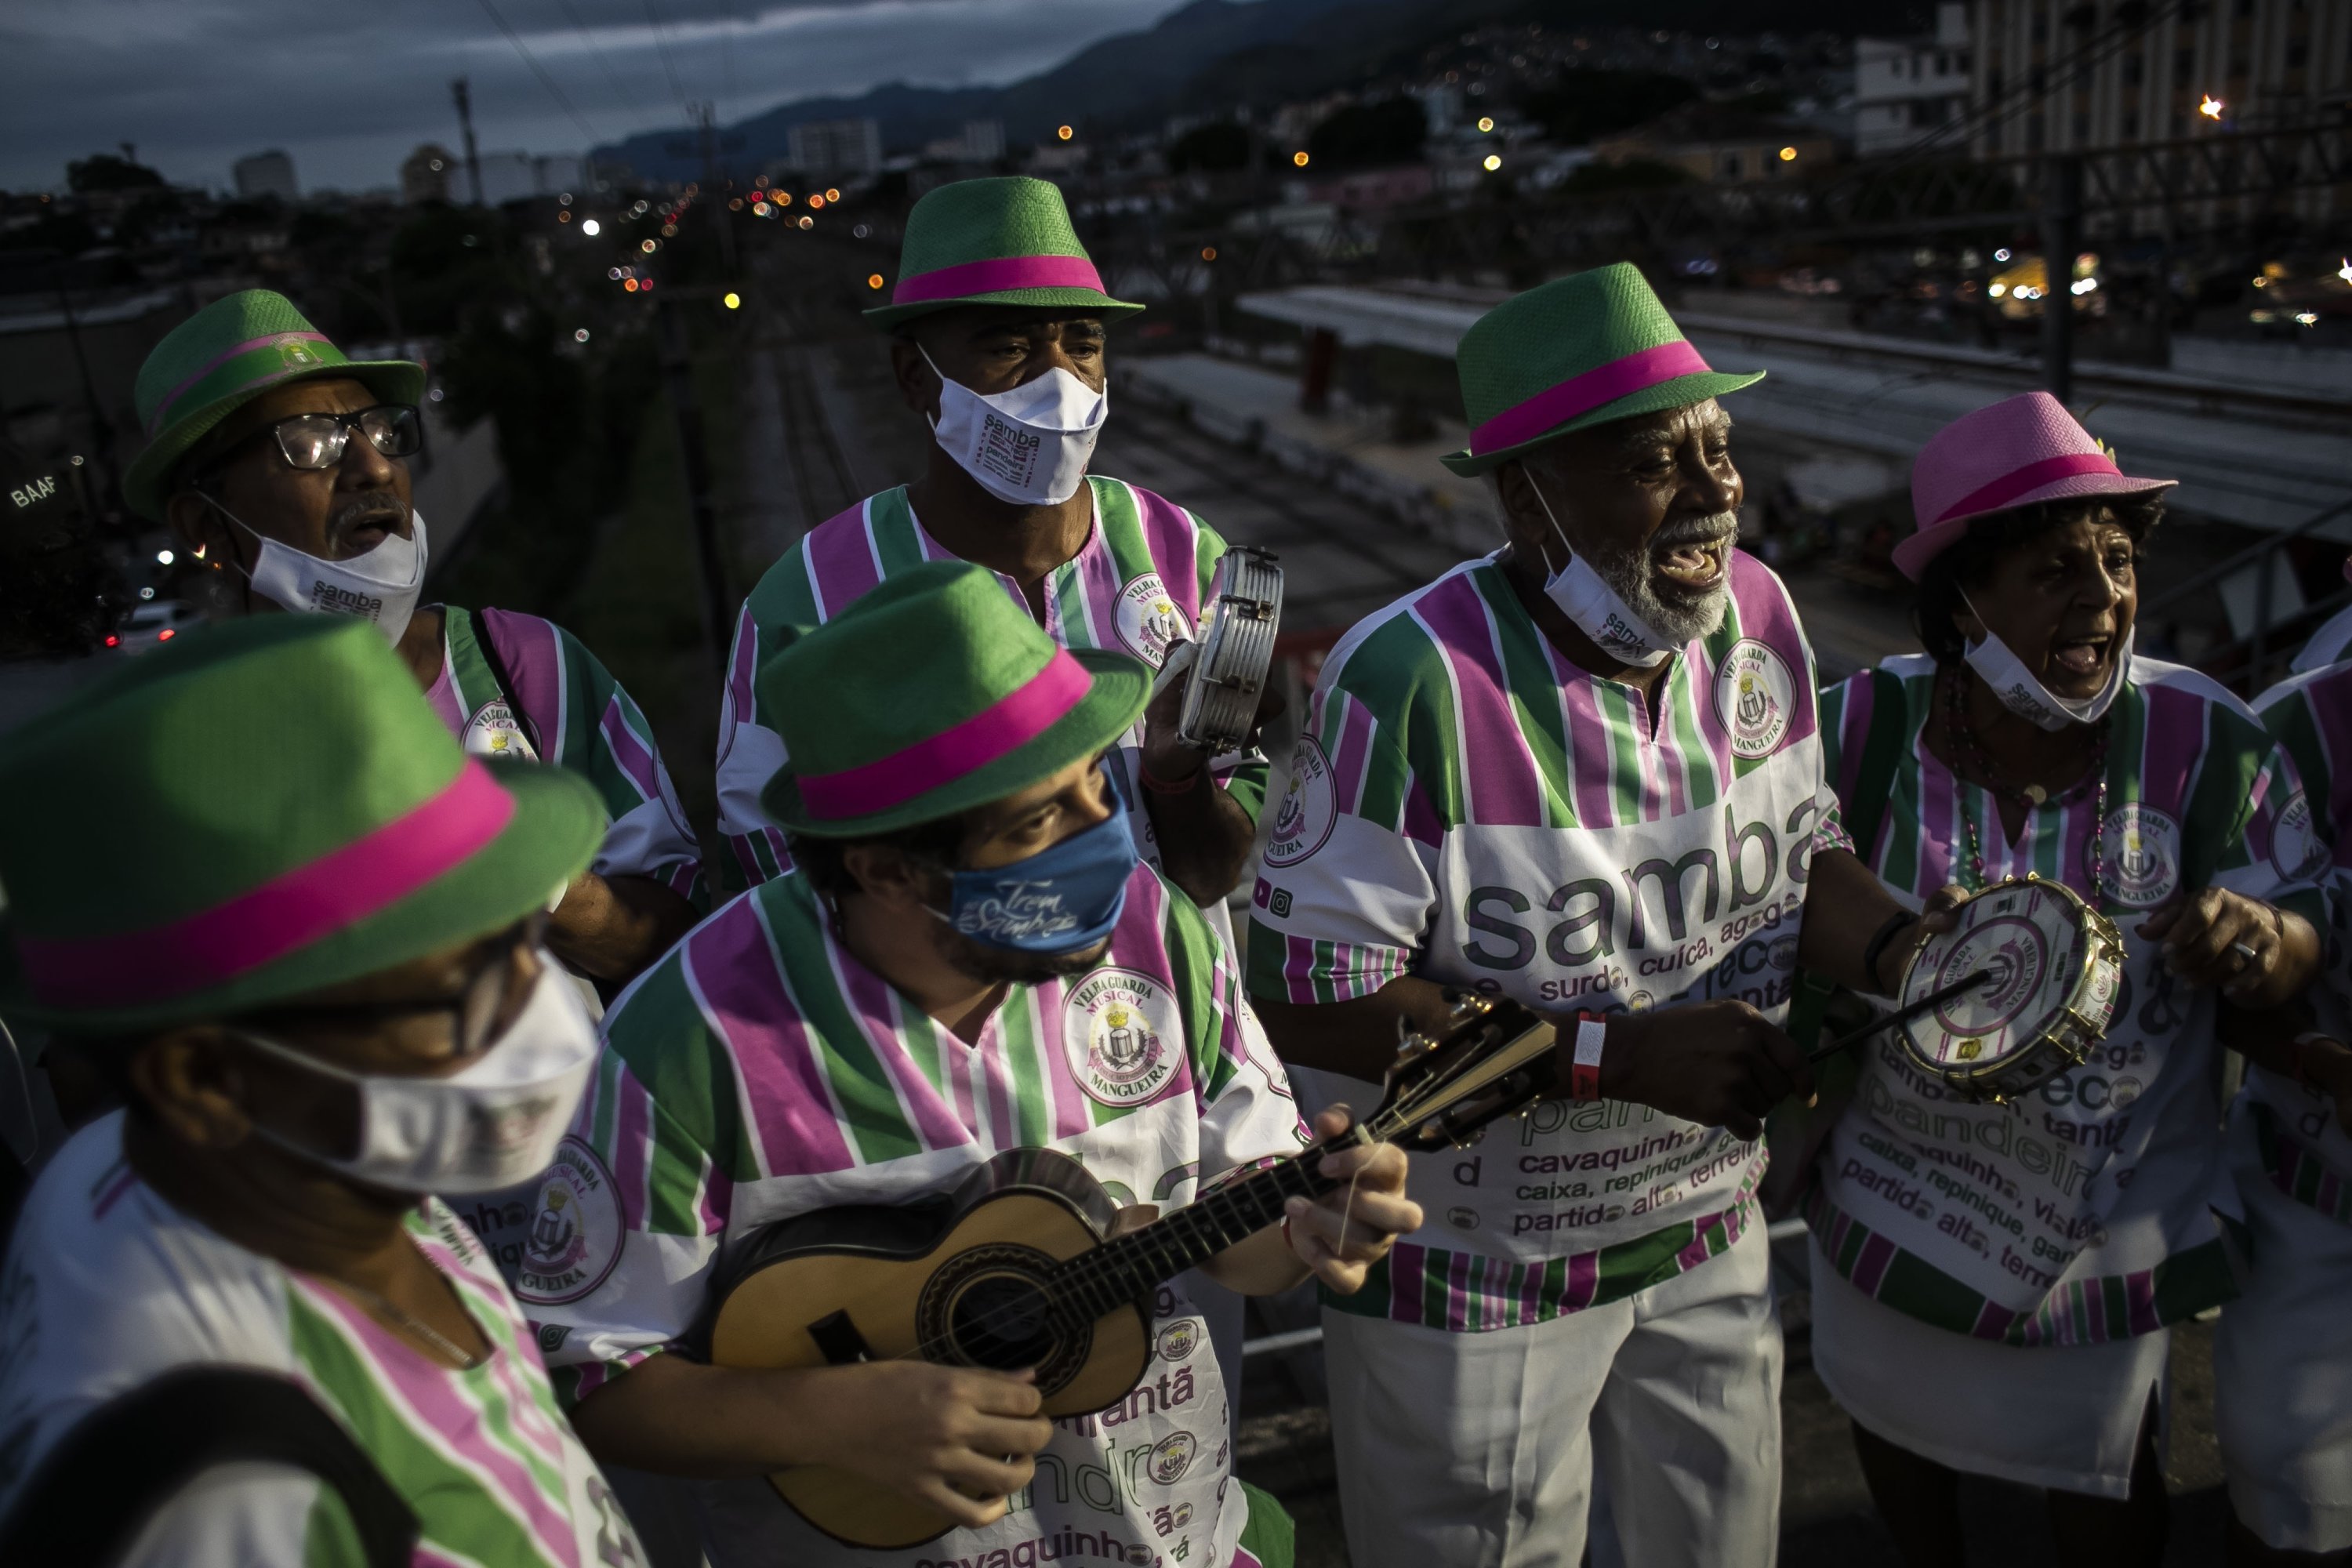 Members of the Mangueira samba school perform at the Oswaldo Cruz Station in Rio de Janeiro, Brazil, Dec. 4, 2021. (AP Photo)